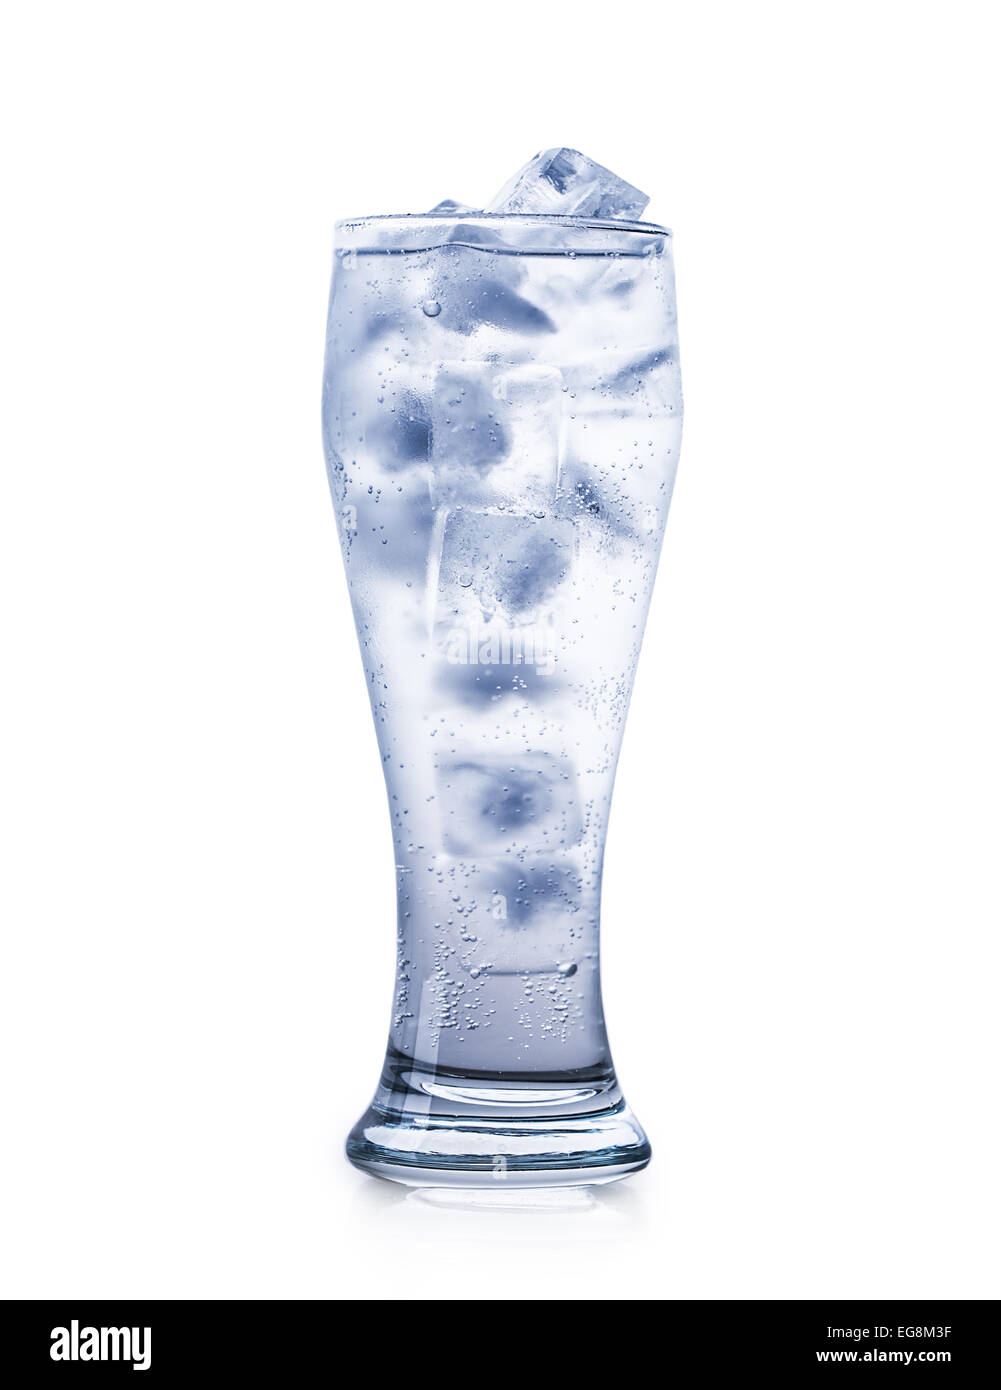 https://c8.alamy.com/comp/EG8M3F/ice-glass-water-isolated-white-drink-cubes-EG8M3F.jpg